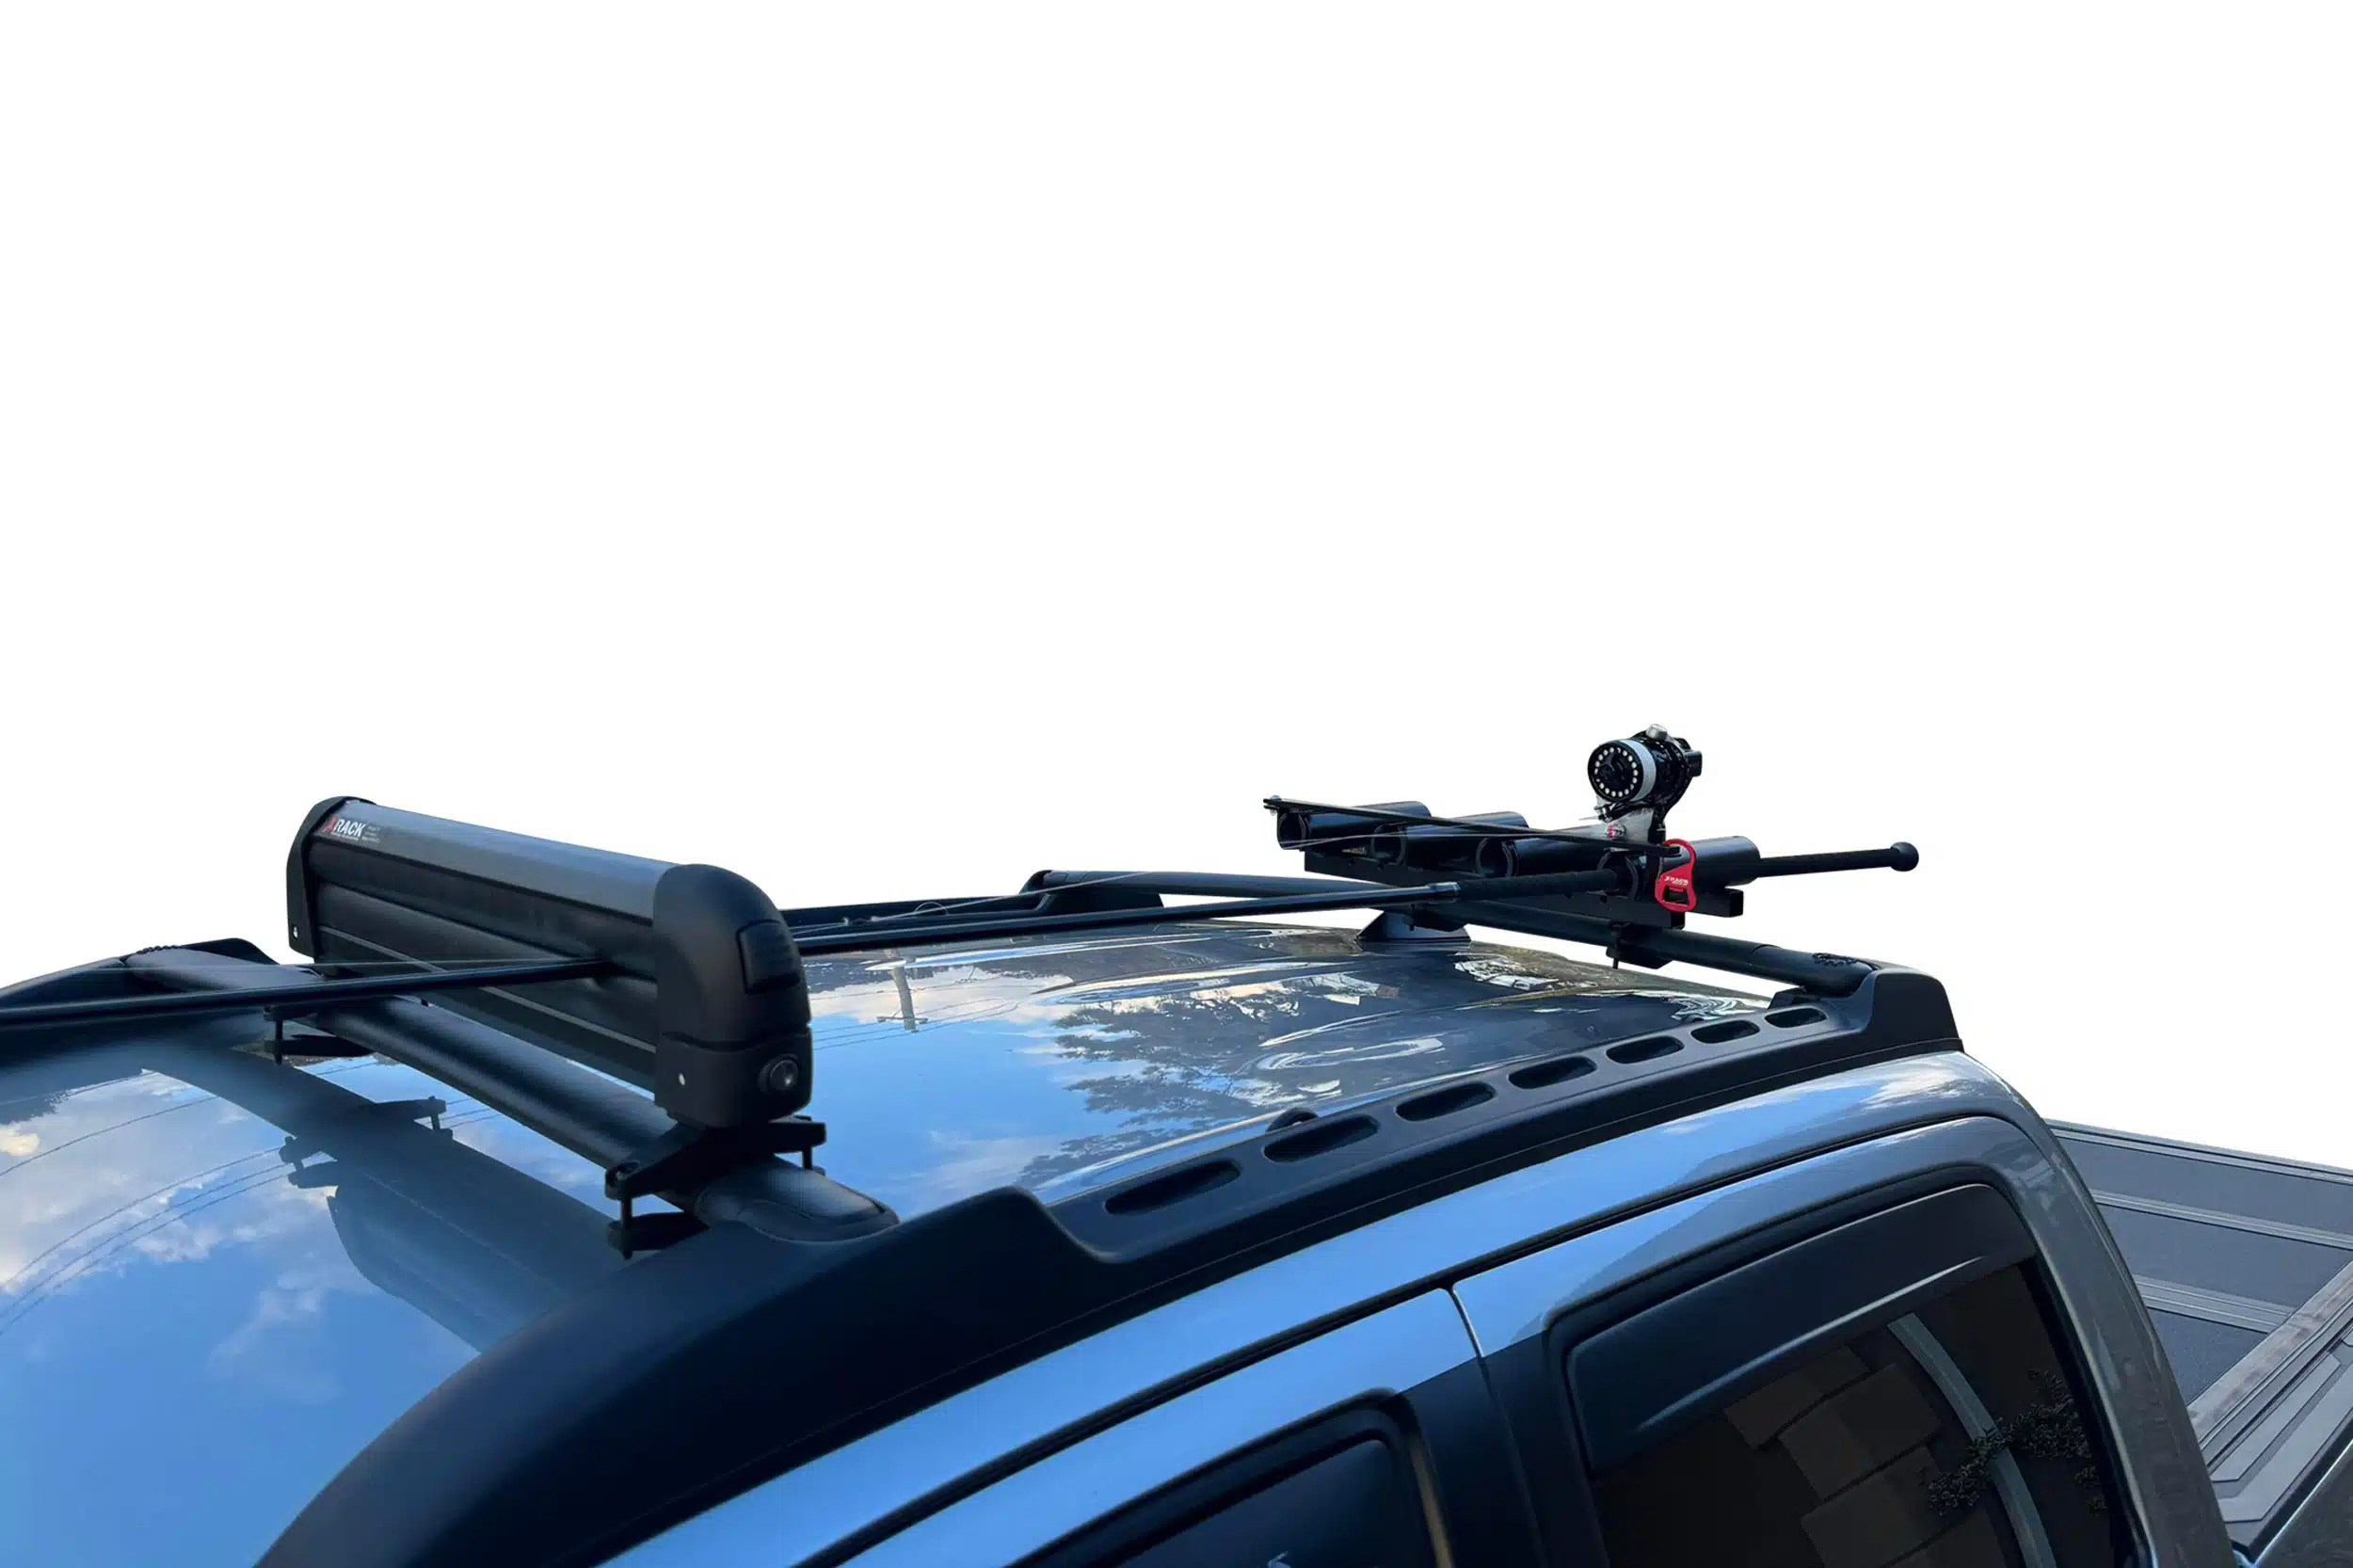 New! Heavy Duty Vehicle Fishing Rod Holder, Car Fishing Pole Roof